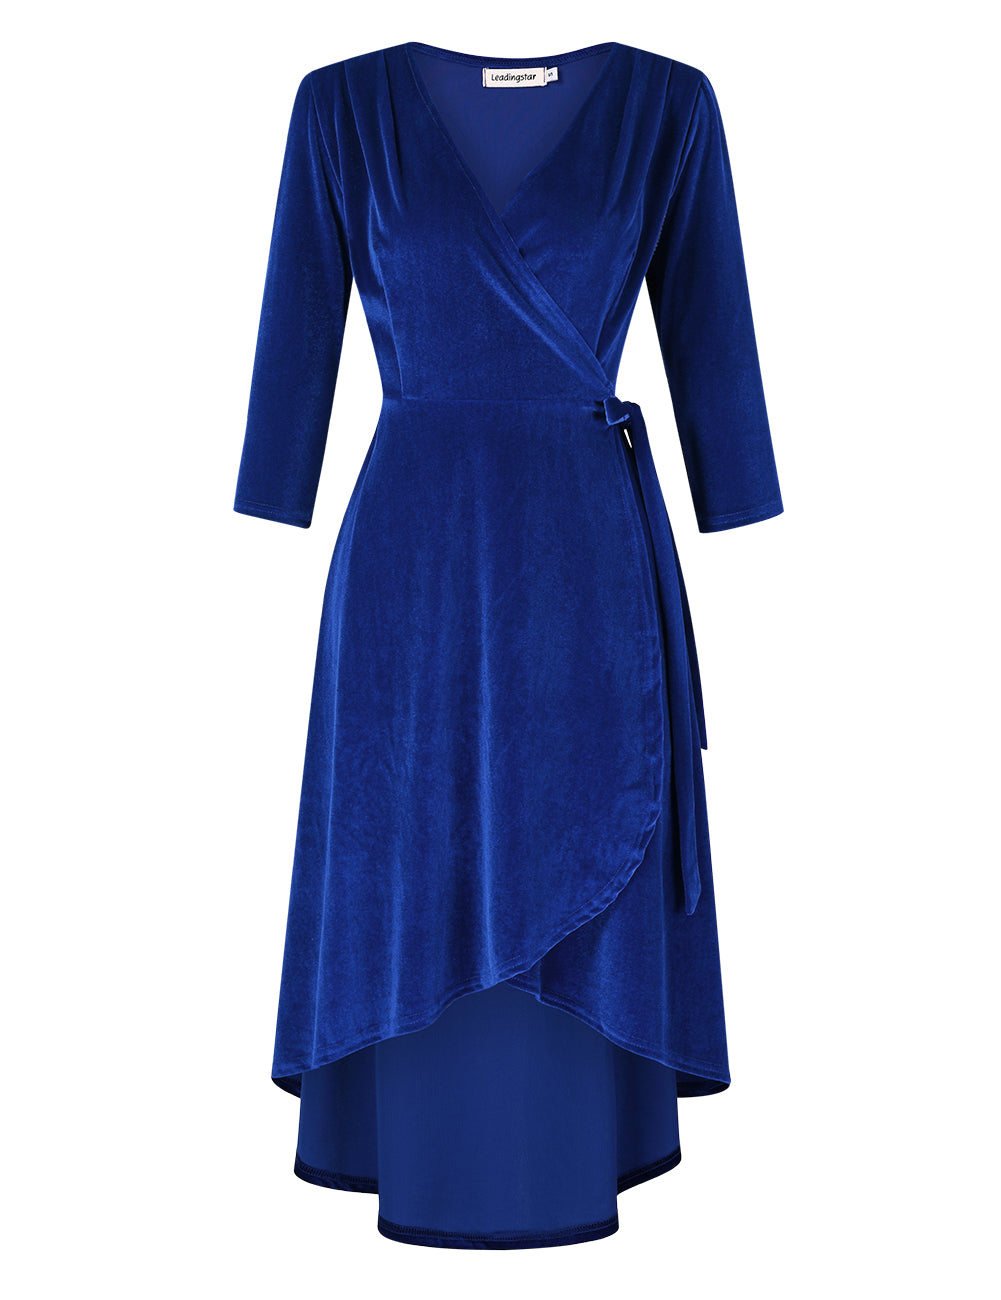 YESFASHION Women's Velvet V-Neck Long Sleeve Casual Party Dress Blue